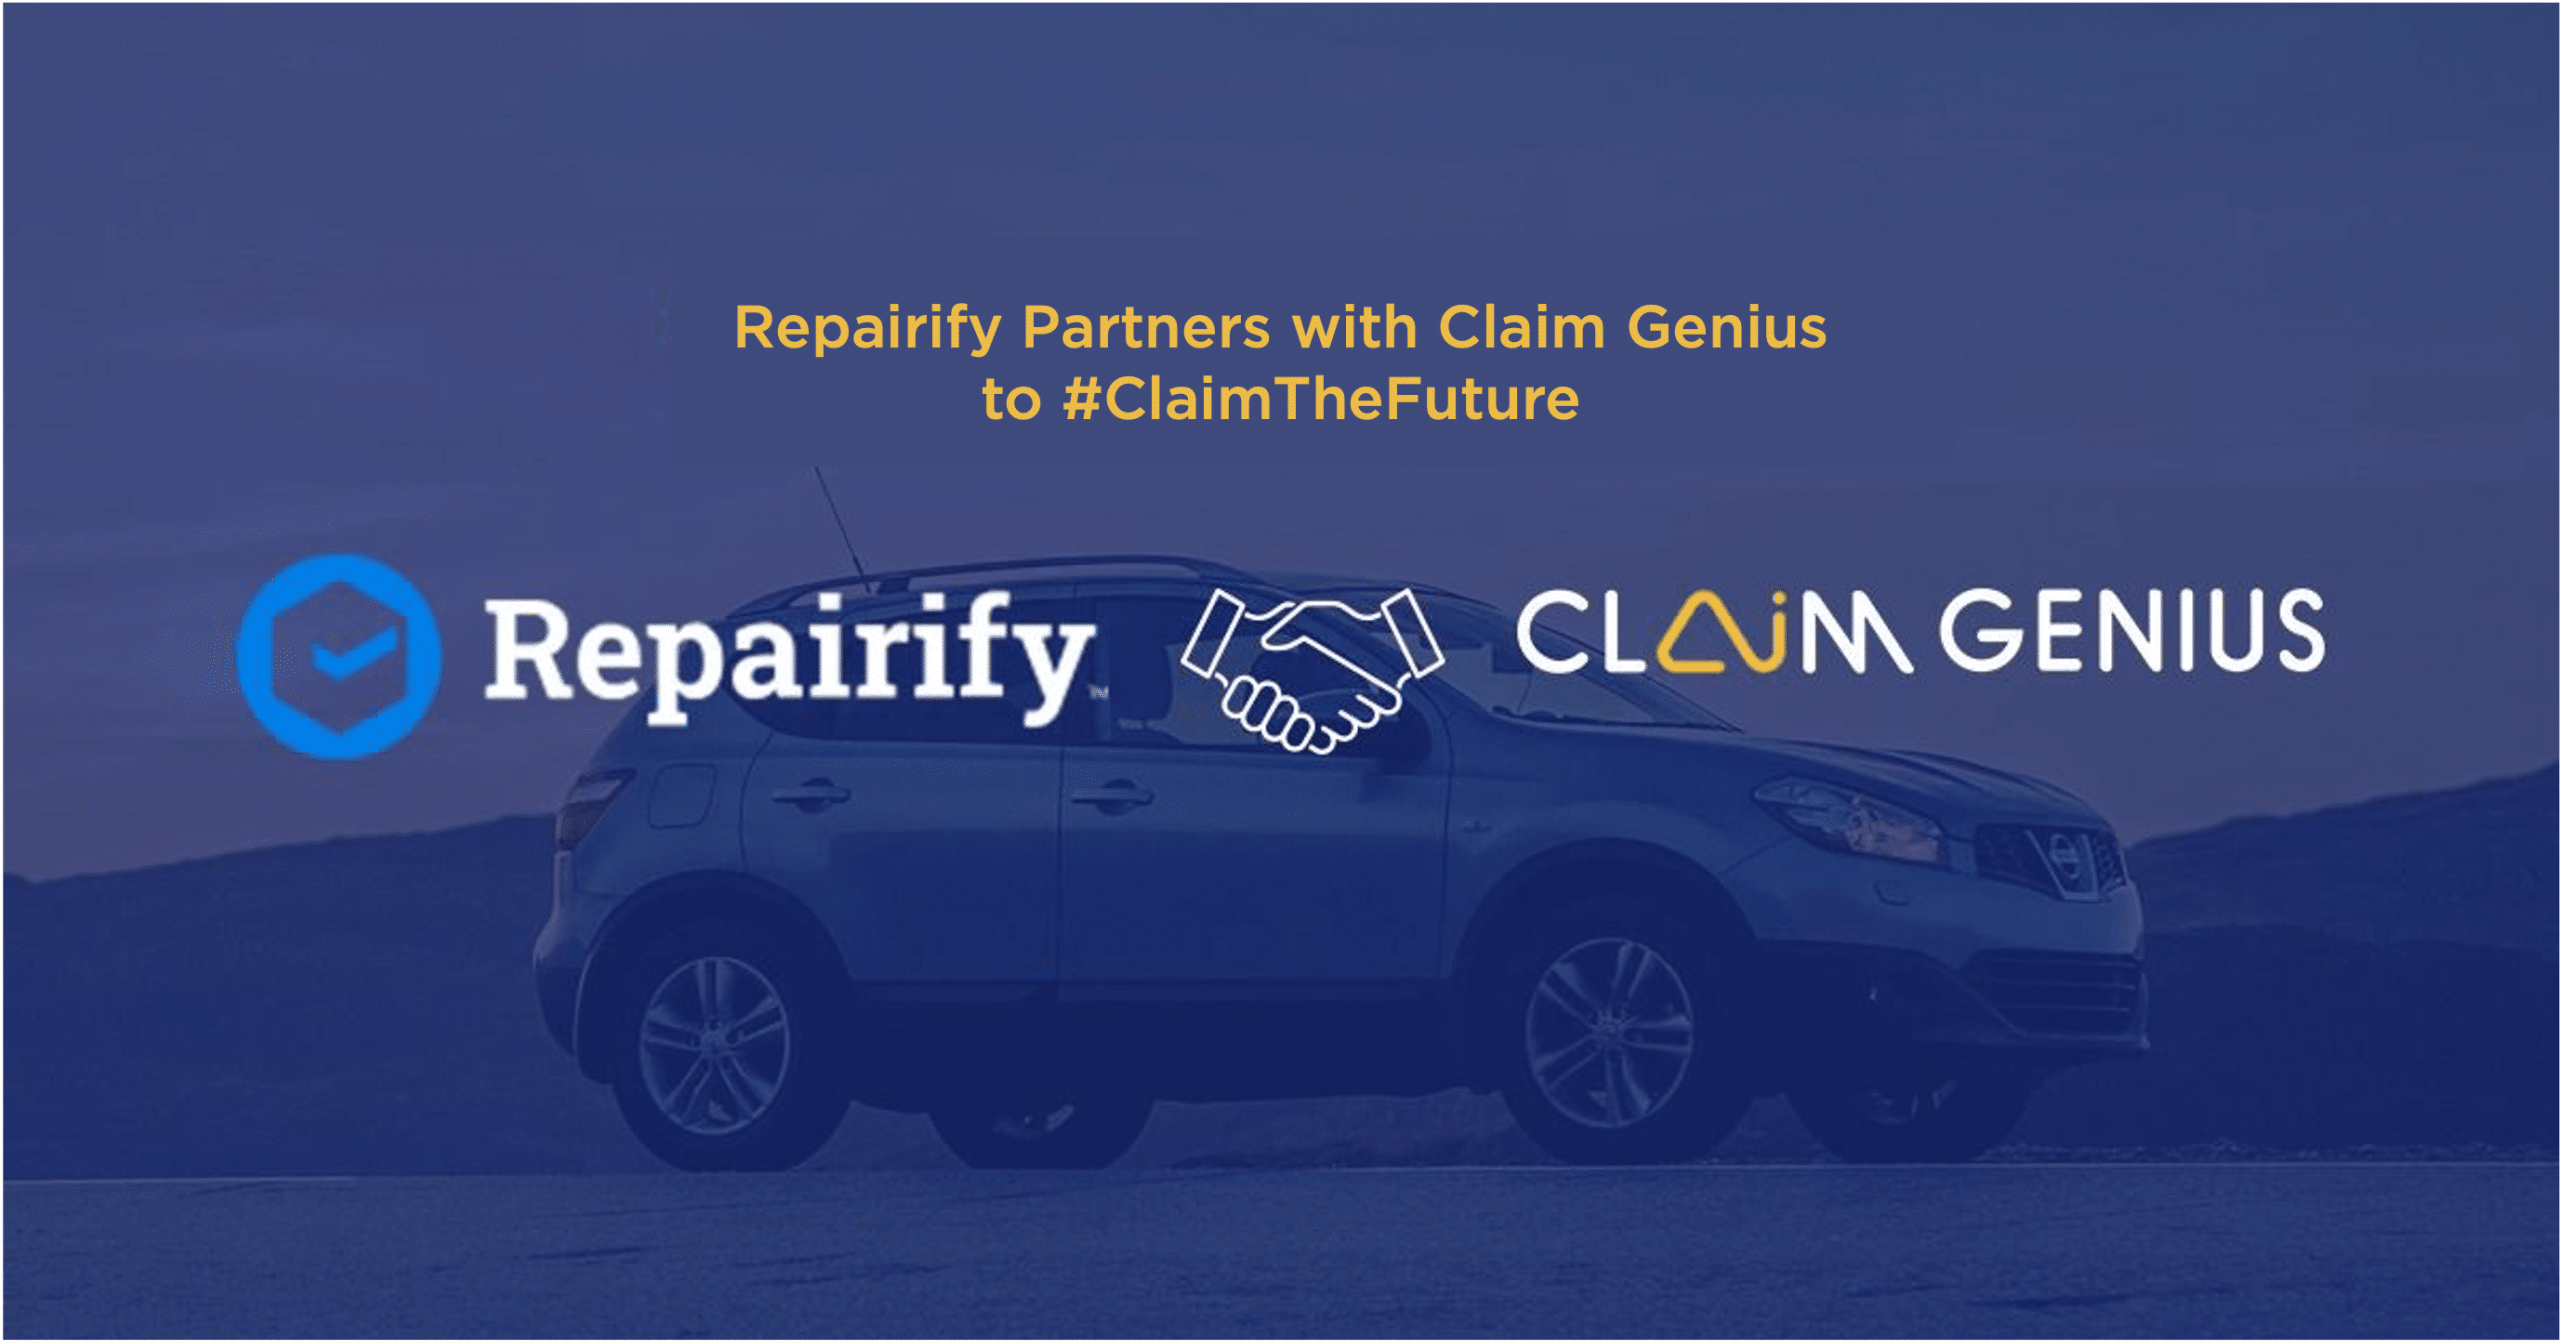 ClaimGenius Partnership with Repairify